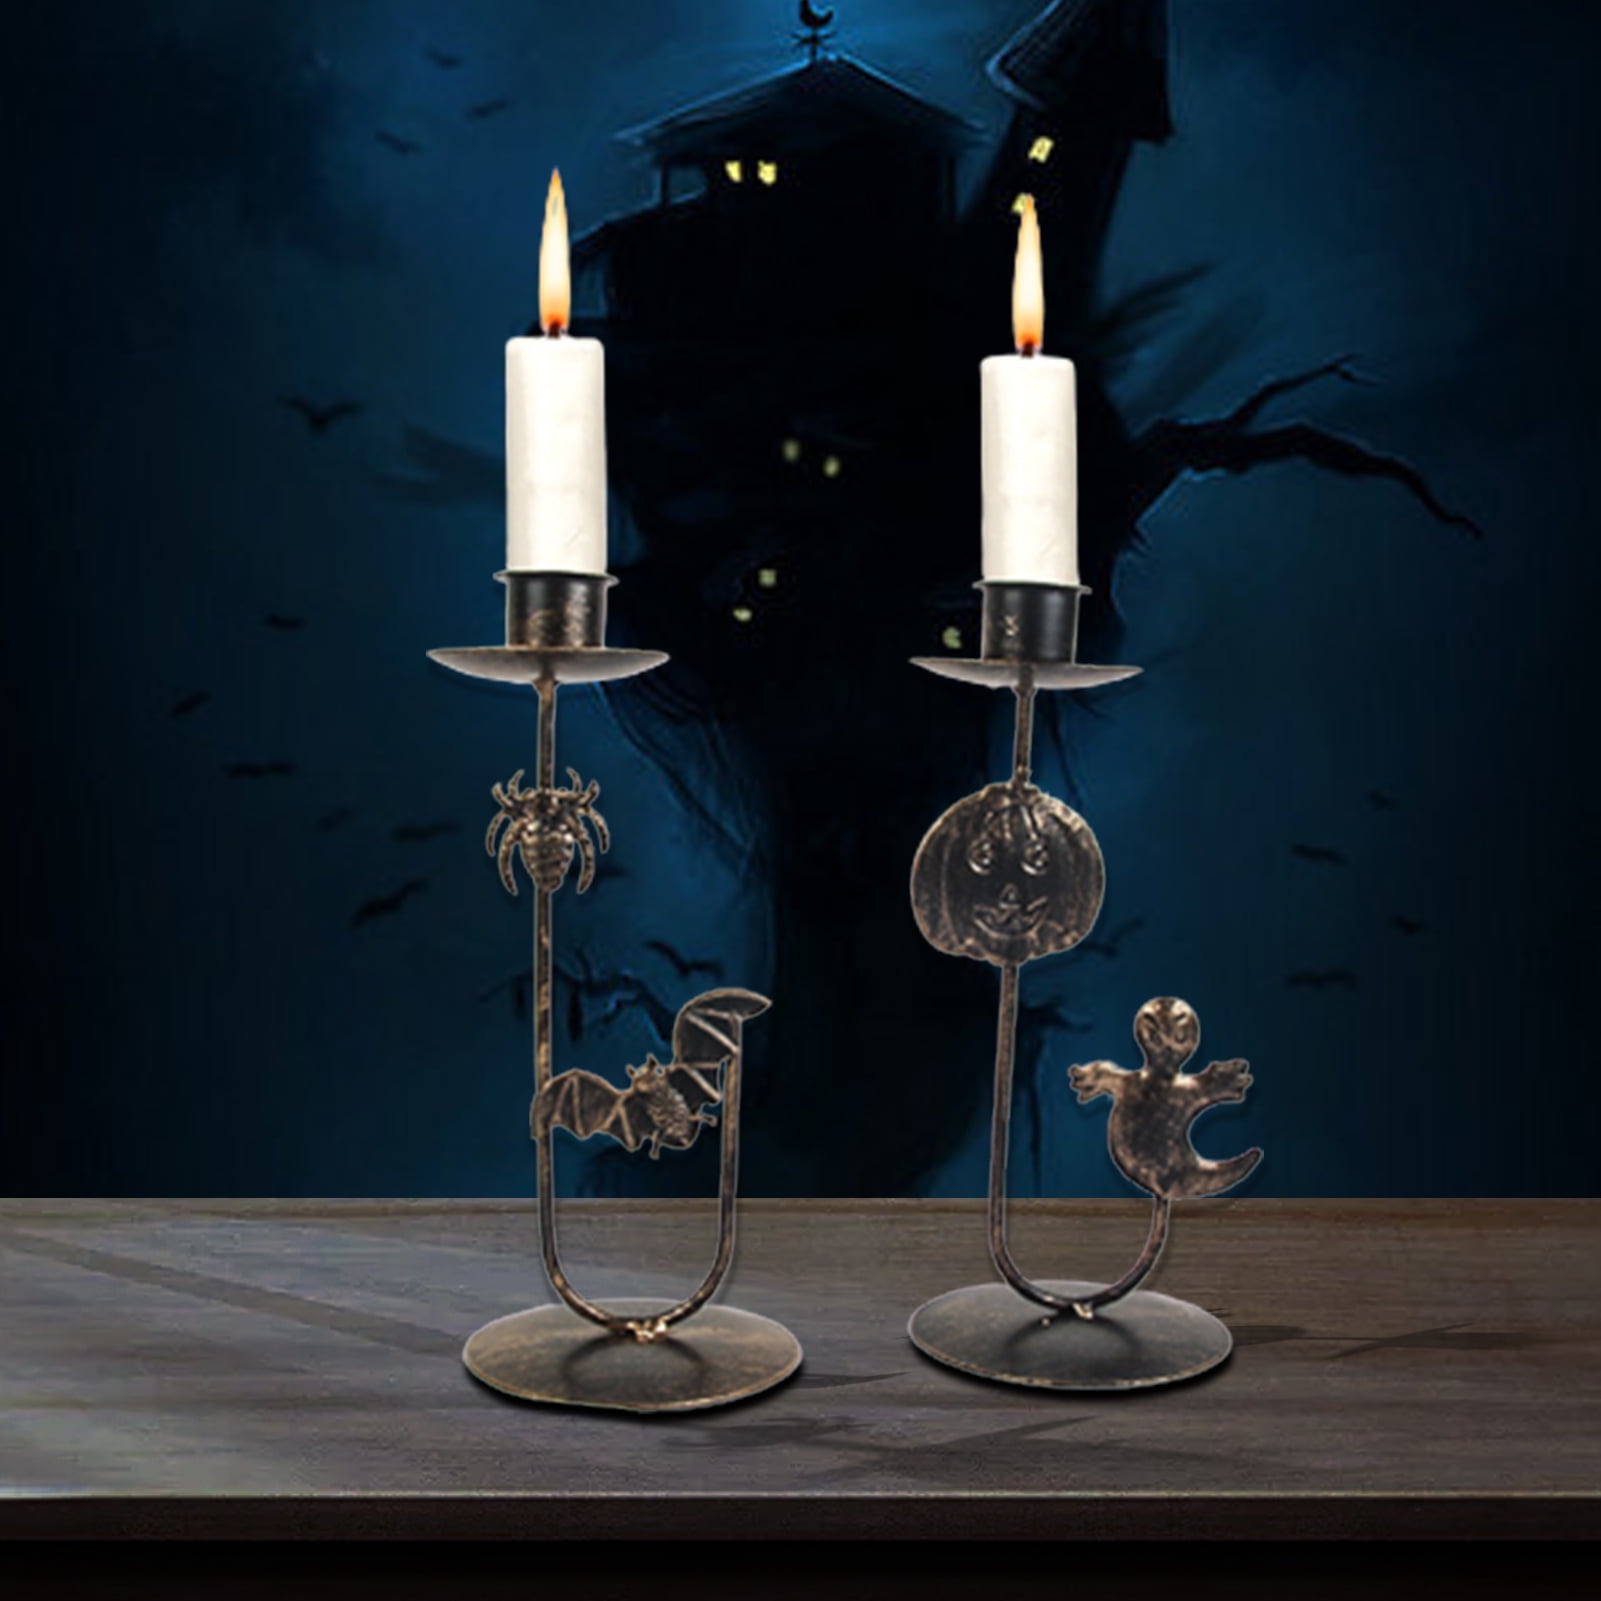 Halloween Skeleton Sculpture LED Flameless Candle Holder Fantasy Candle Stick 